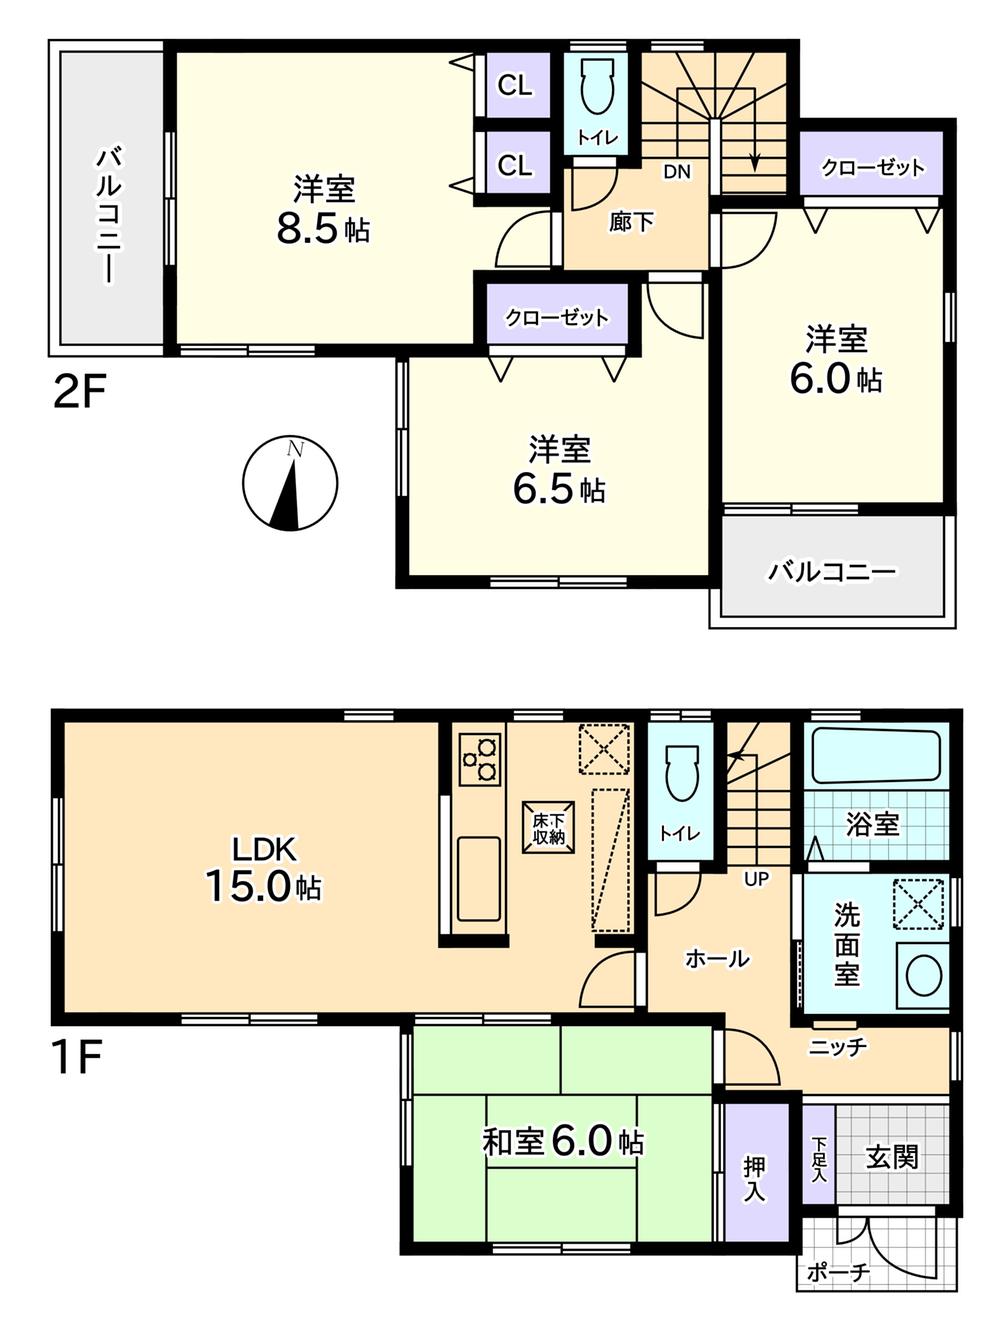 Floor plan. 22,800,000 yen, 4LDK, Land area 99.18 sq m , Building area 98.82 sq m